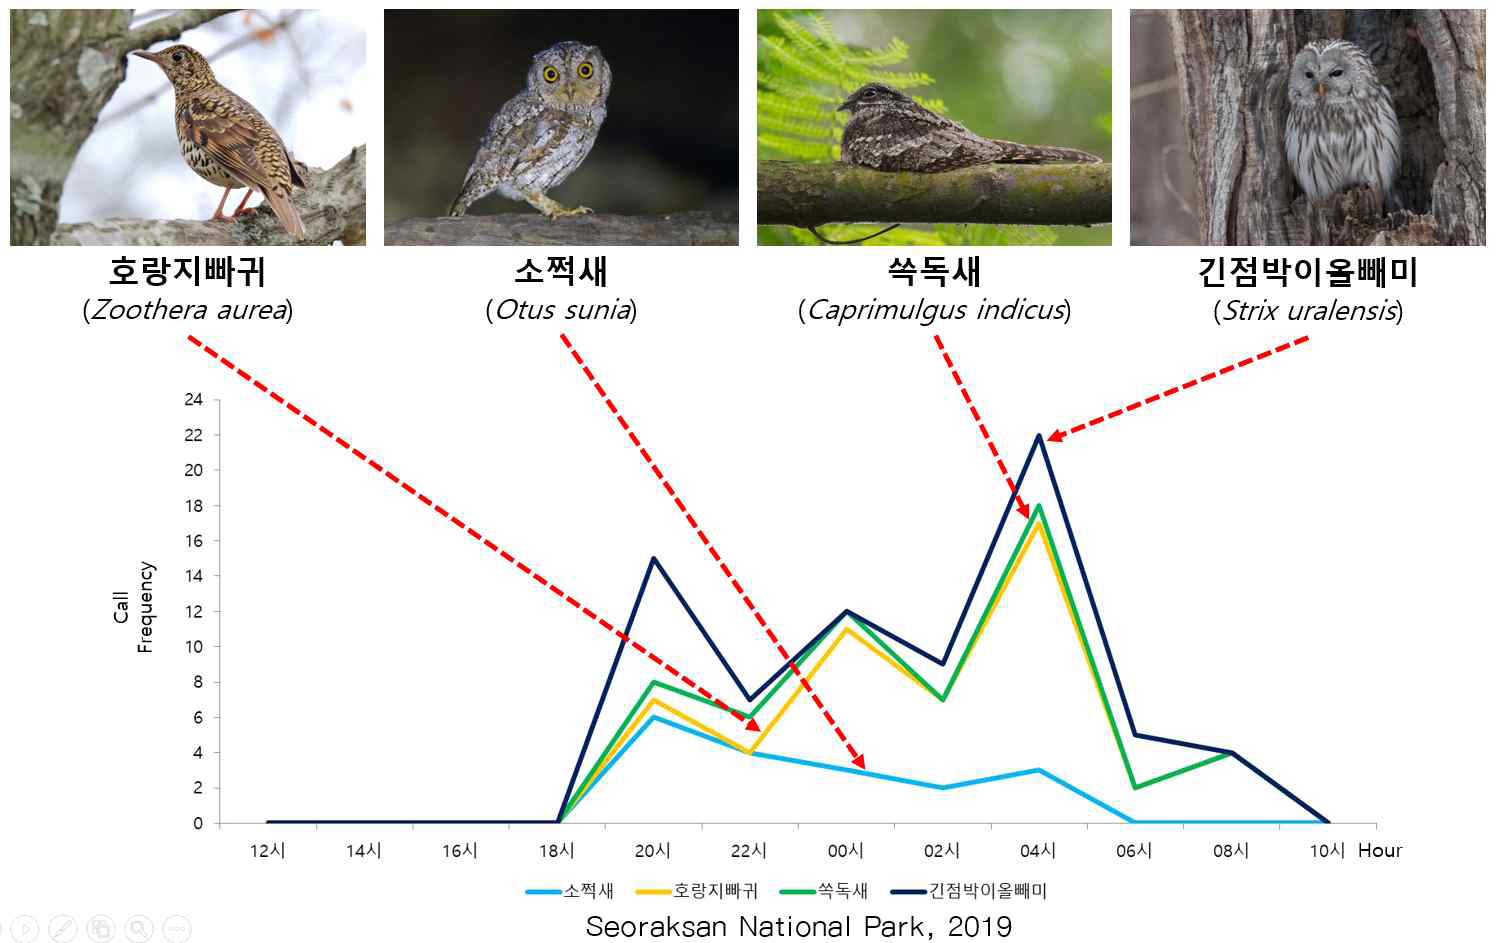 Phenological observation of nocturnal birds